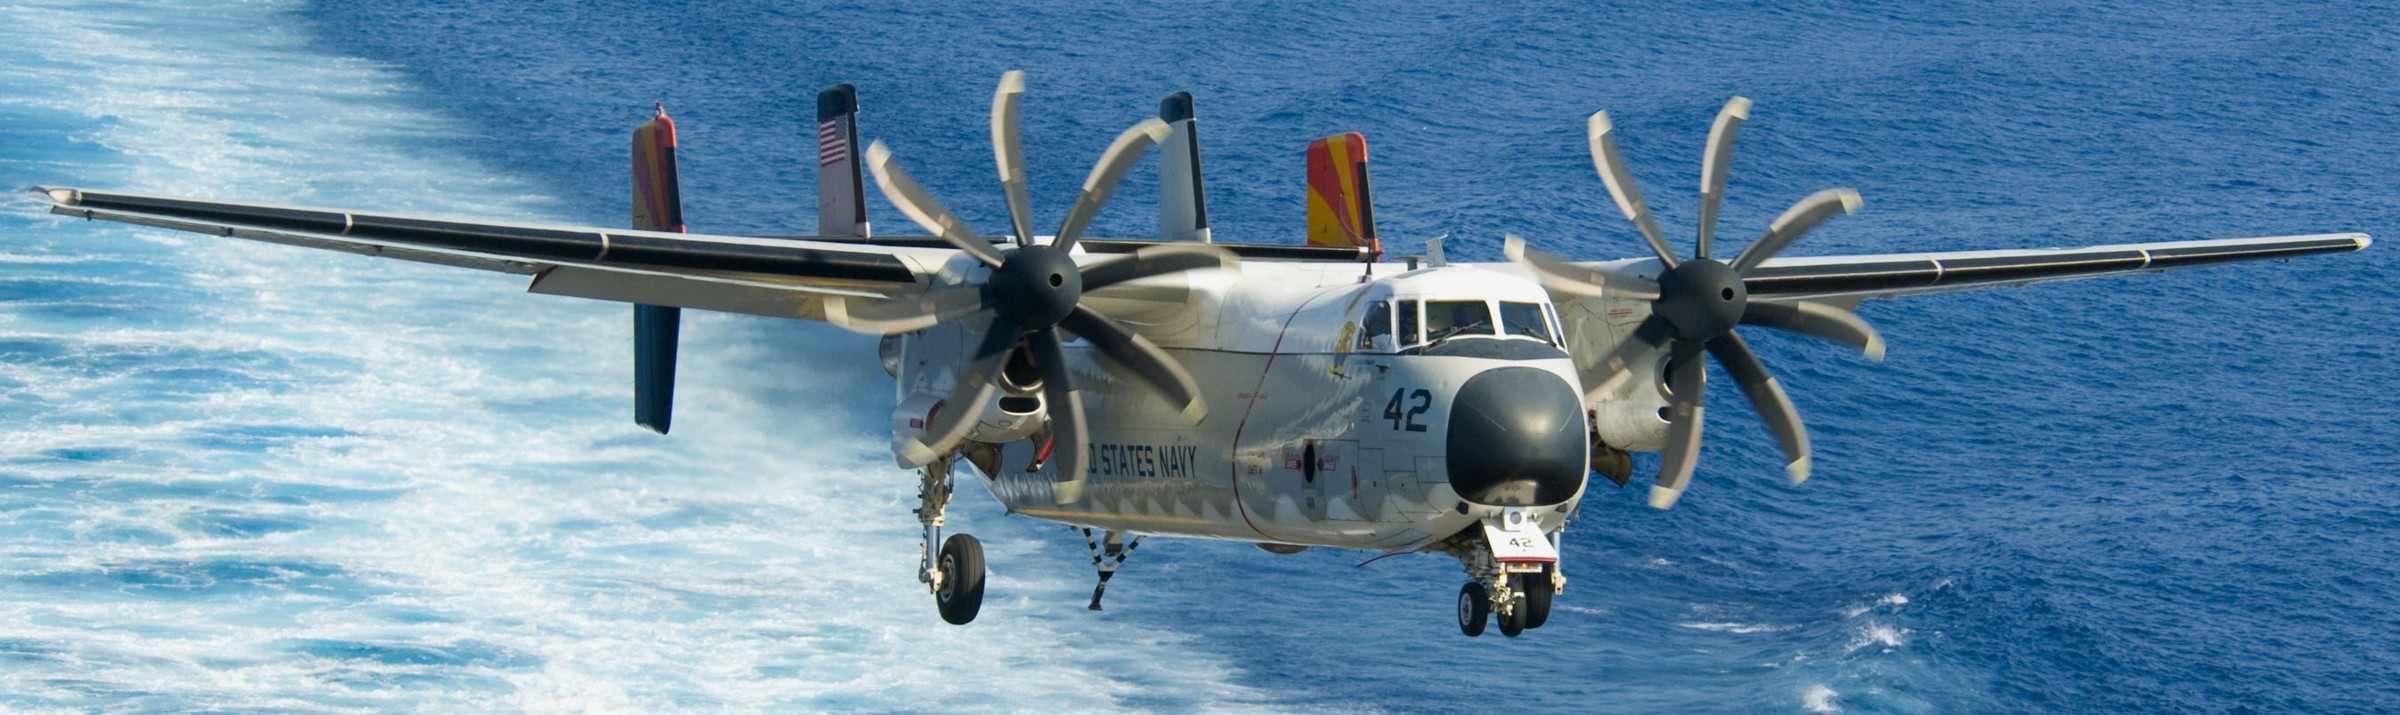 vrc-40 rawhides fleet logistics support squadron flelogsupron us navy grumman c-2a greyhound uss carl vinson cvn-70 180